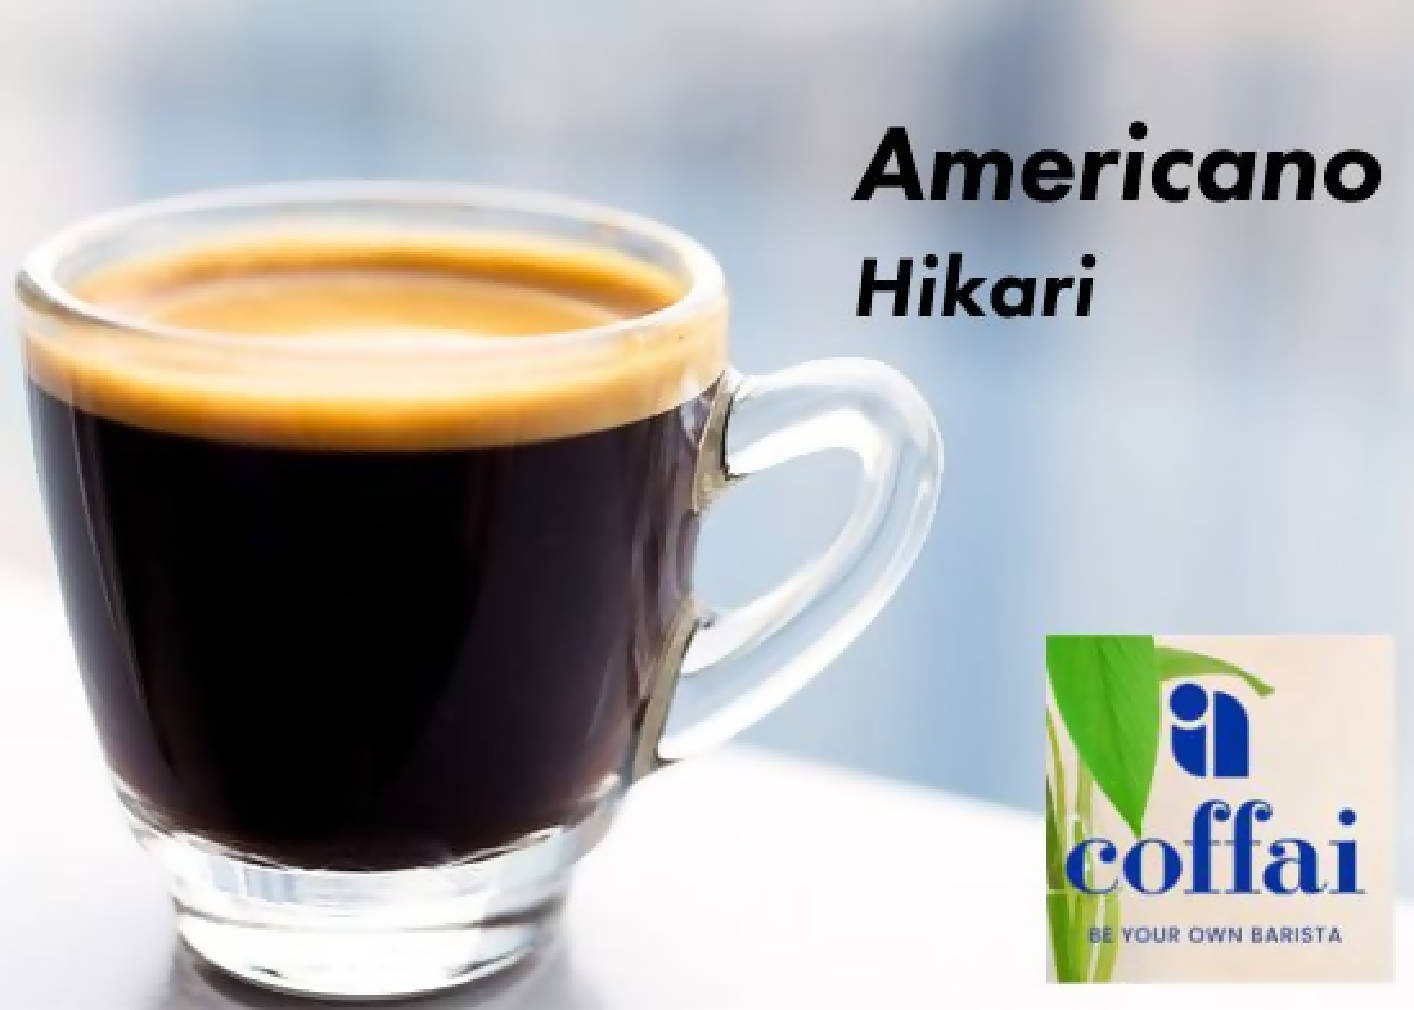 Americano - Hikari